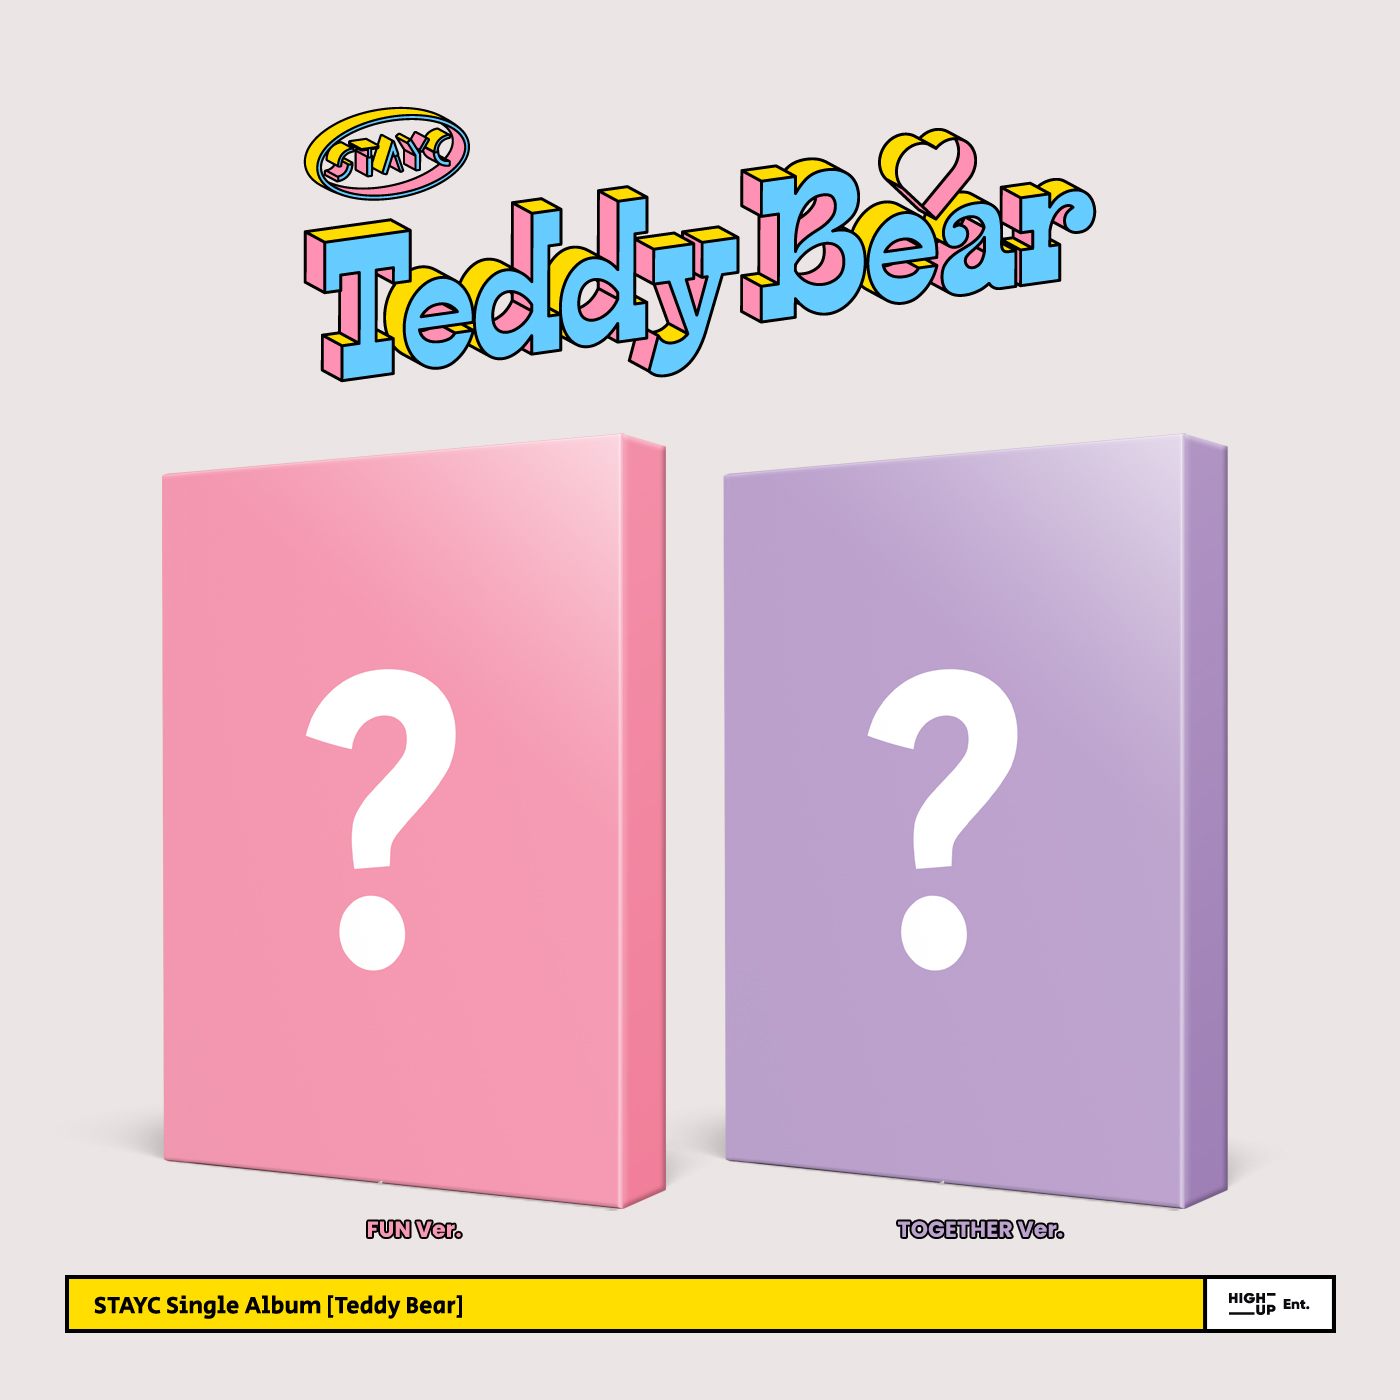 [全款 裸专] [Showcase Event] [2CD 套装] STAYC - 单曲专辑 [Teddy Bear] (FUN Ver. + TOGETHER Ver.)_朴莳恩吧_SieunBar